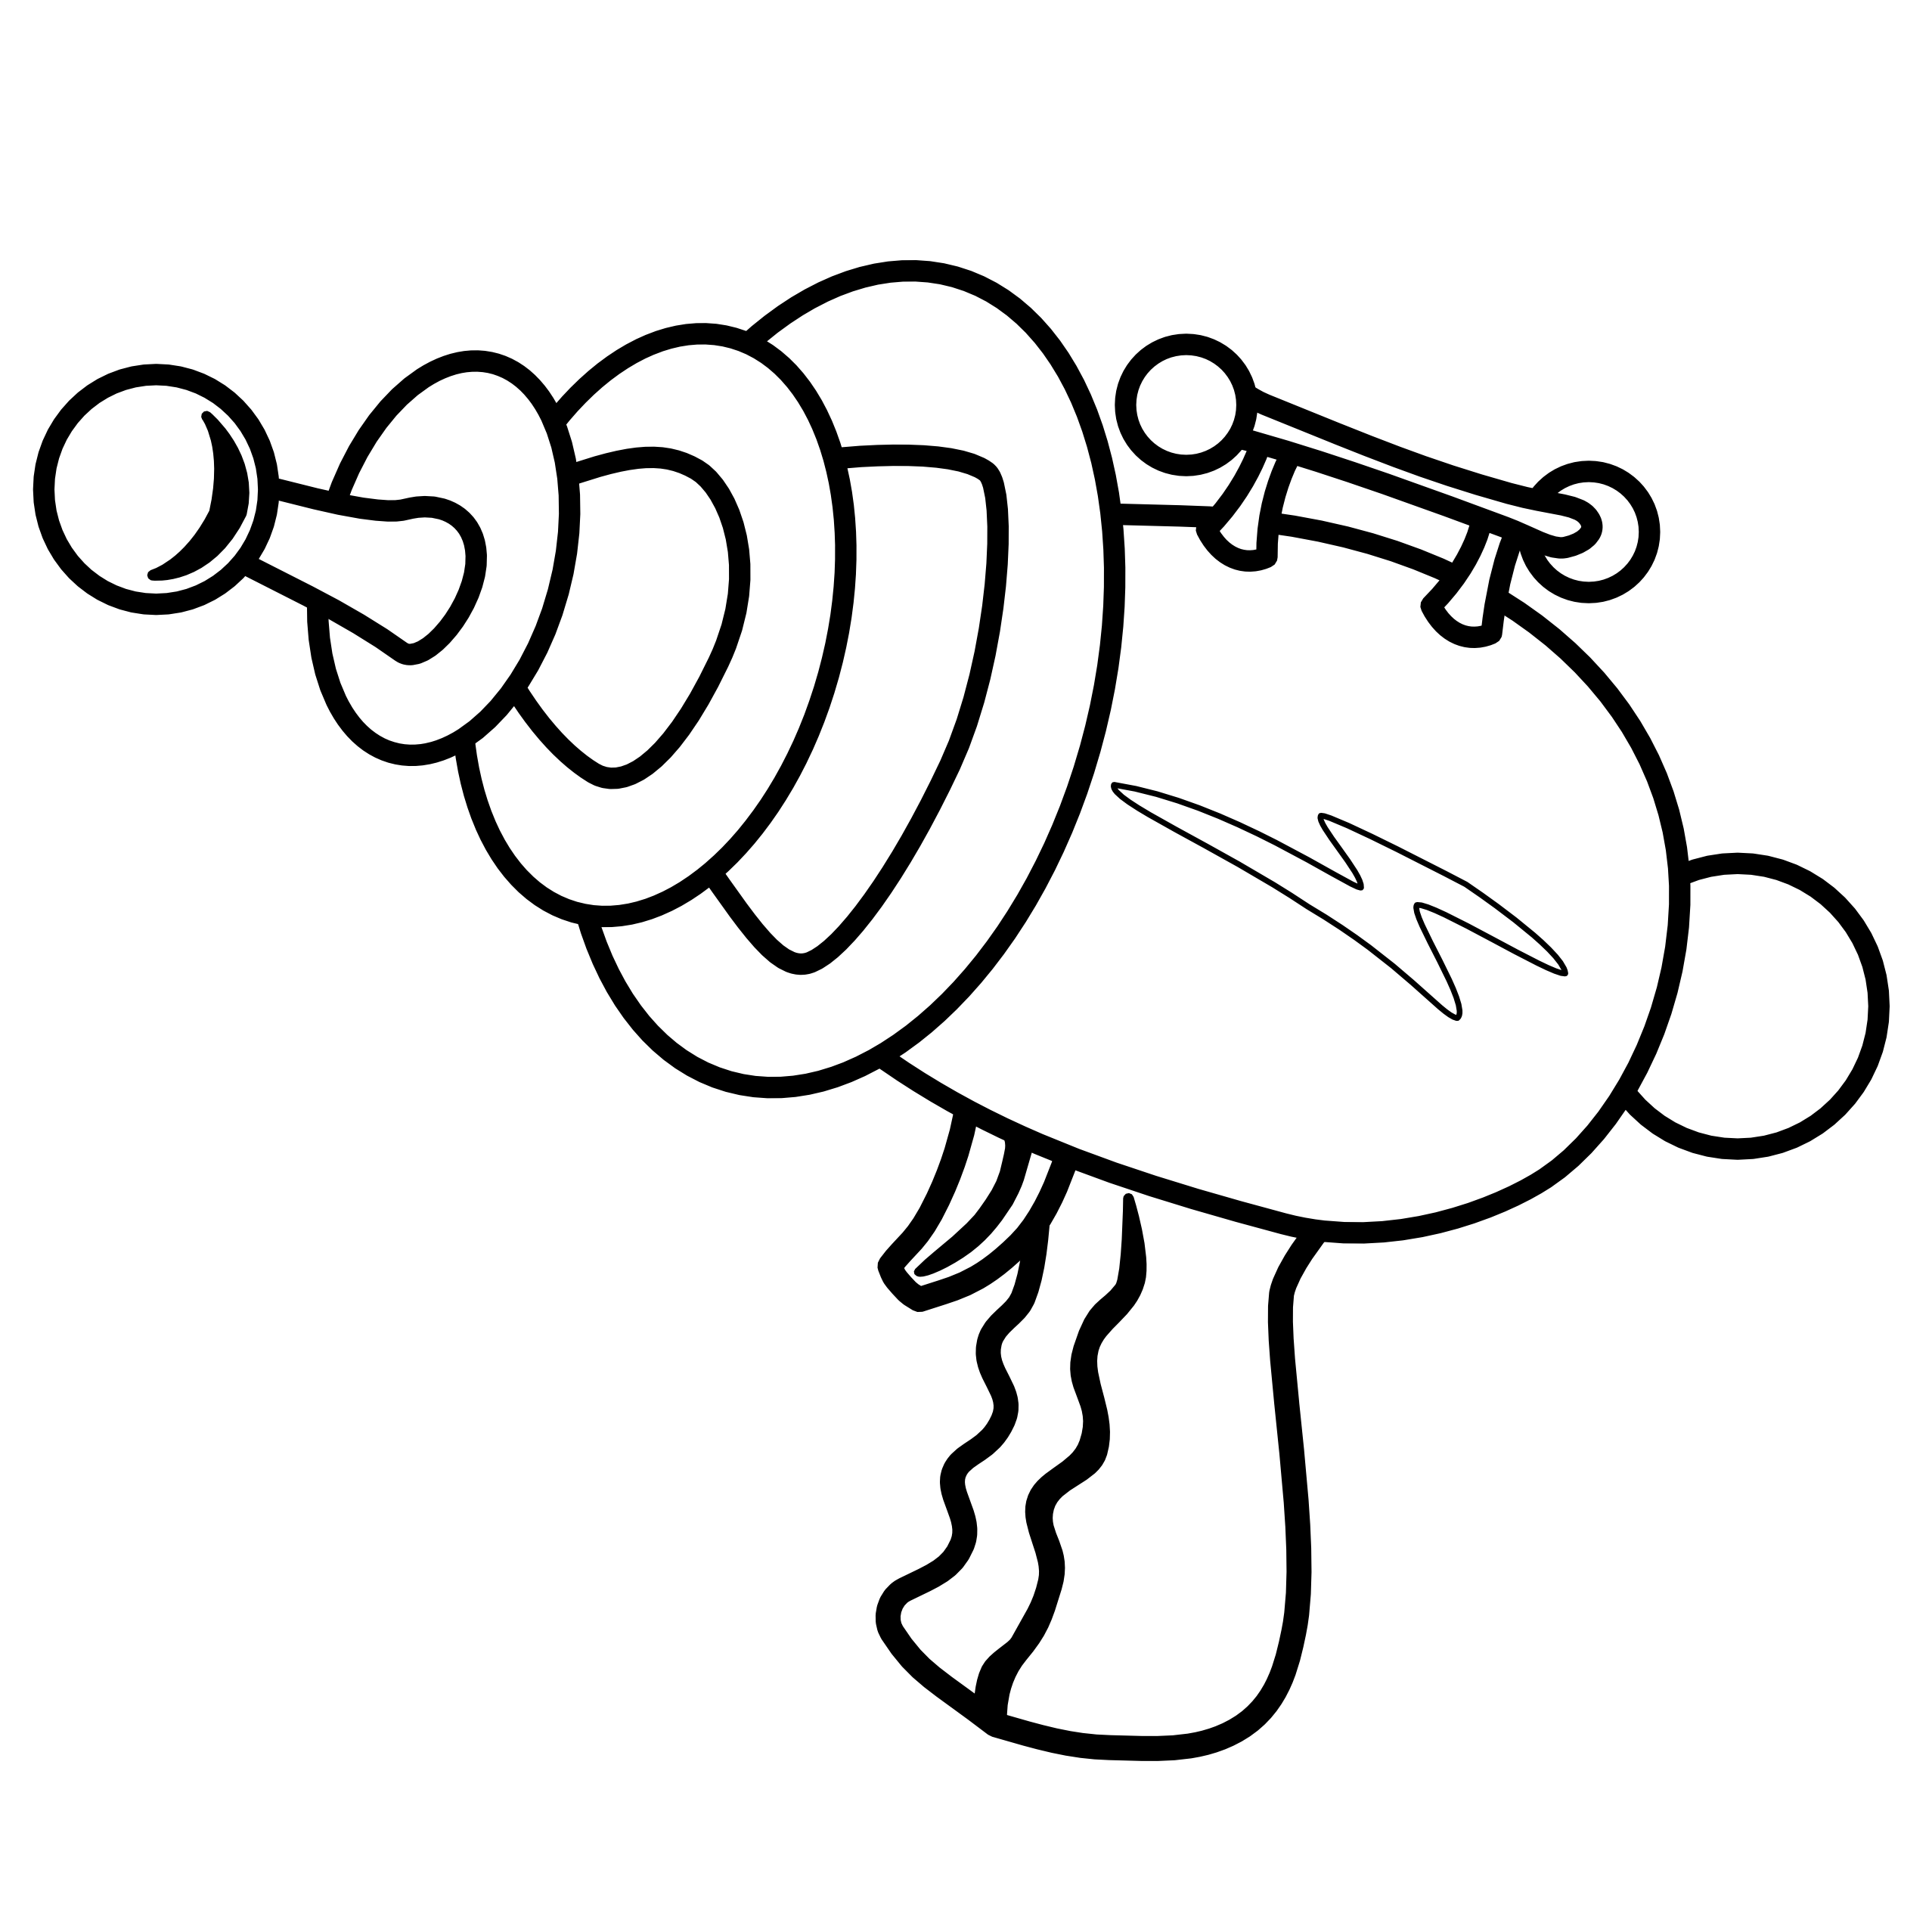 Minimalistic ray gun logo. Paintball clipart black and white